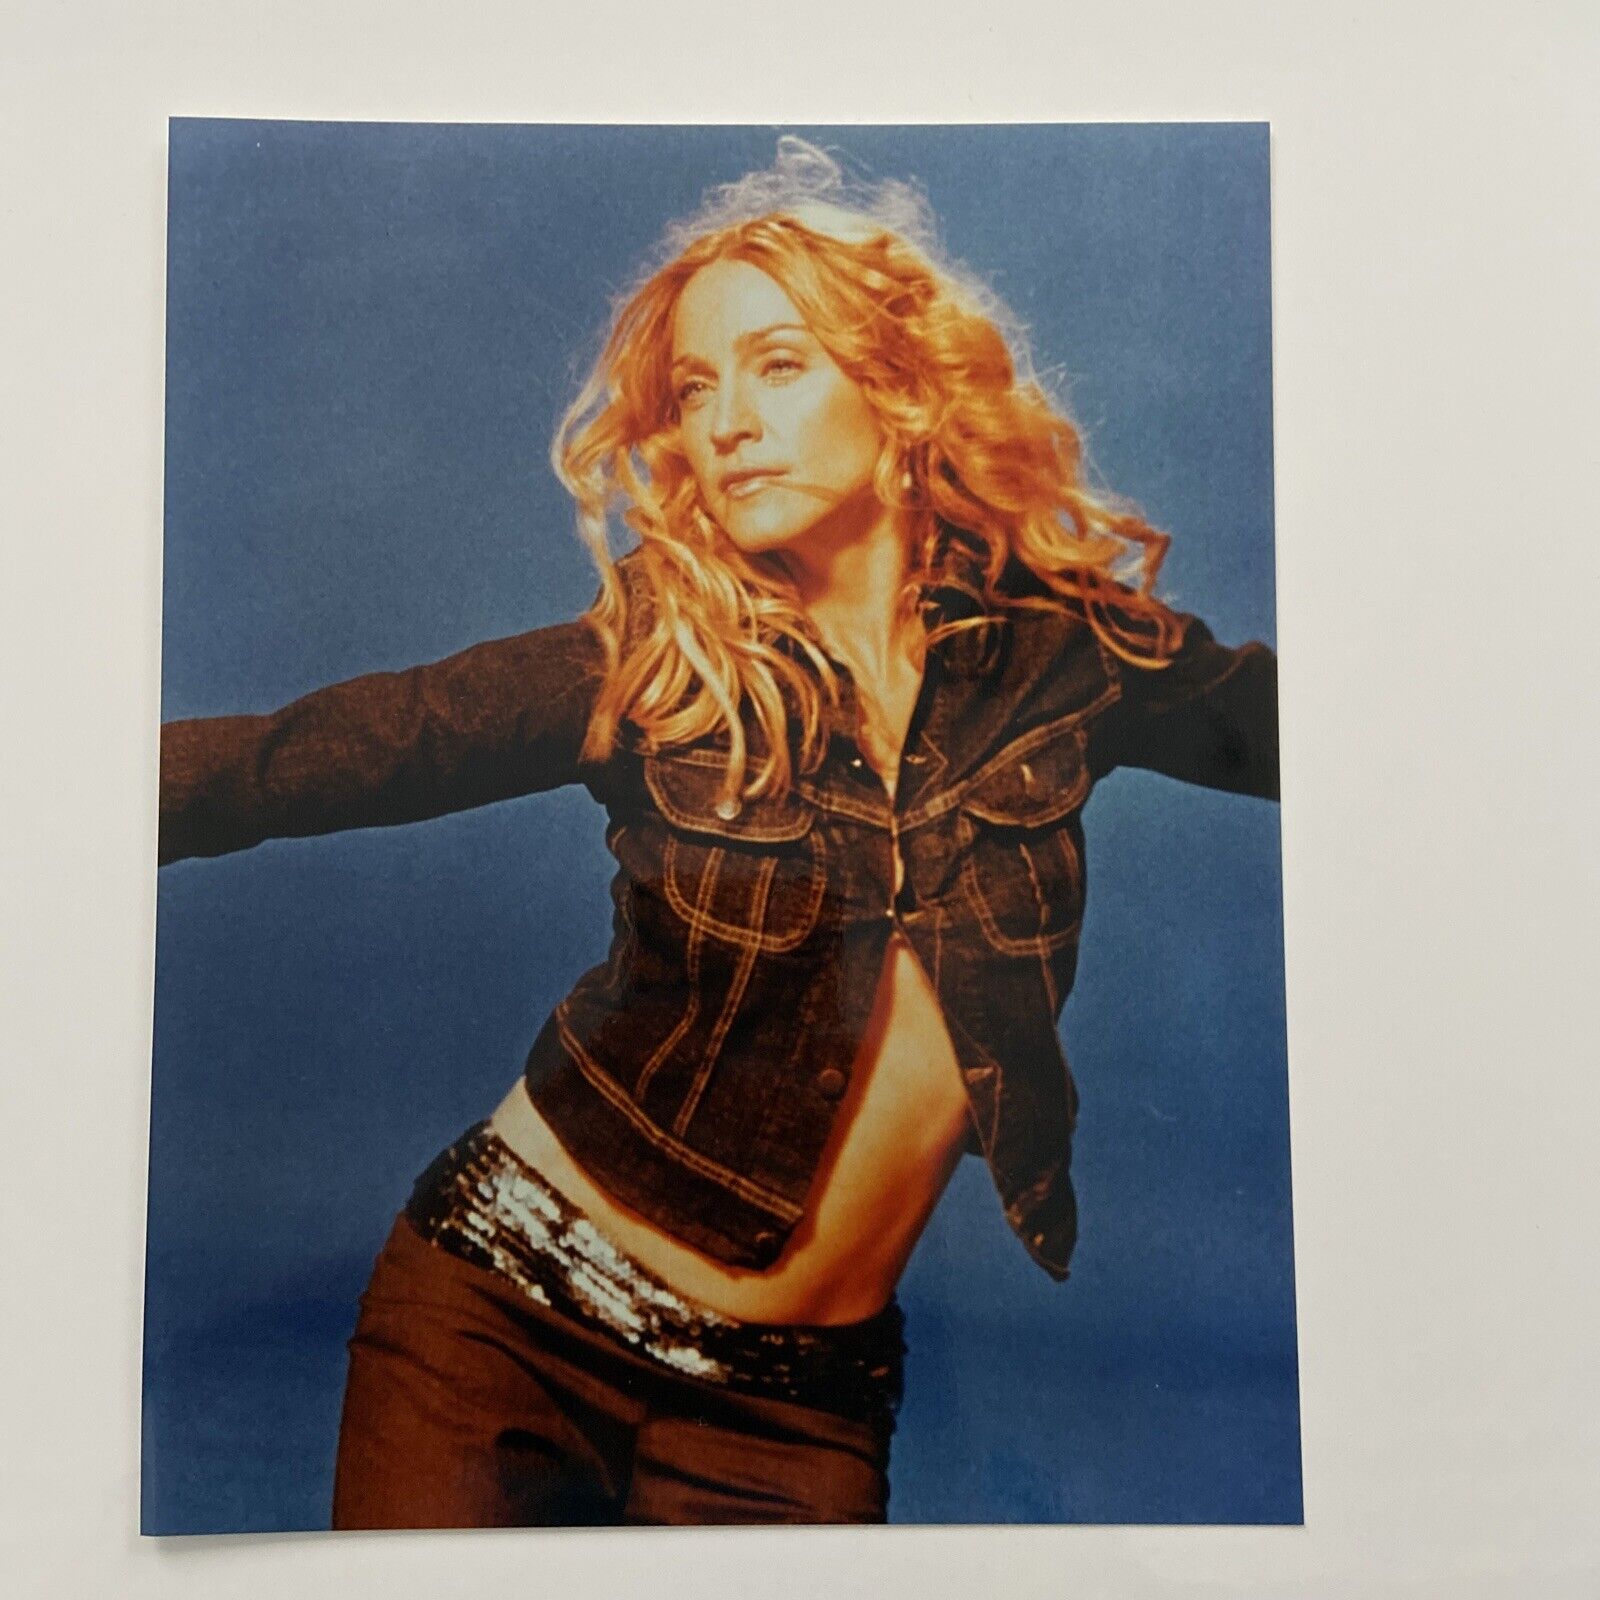 Madonna 8x10 Photo